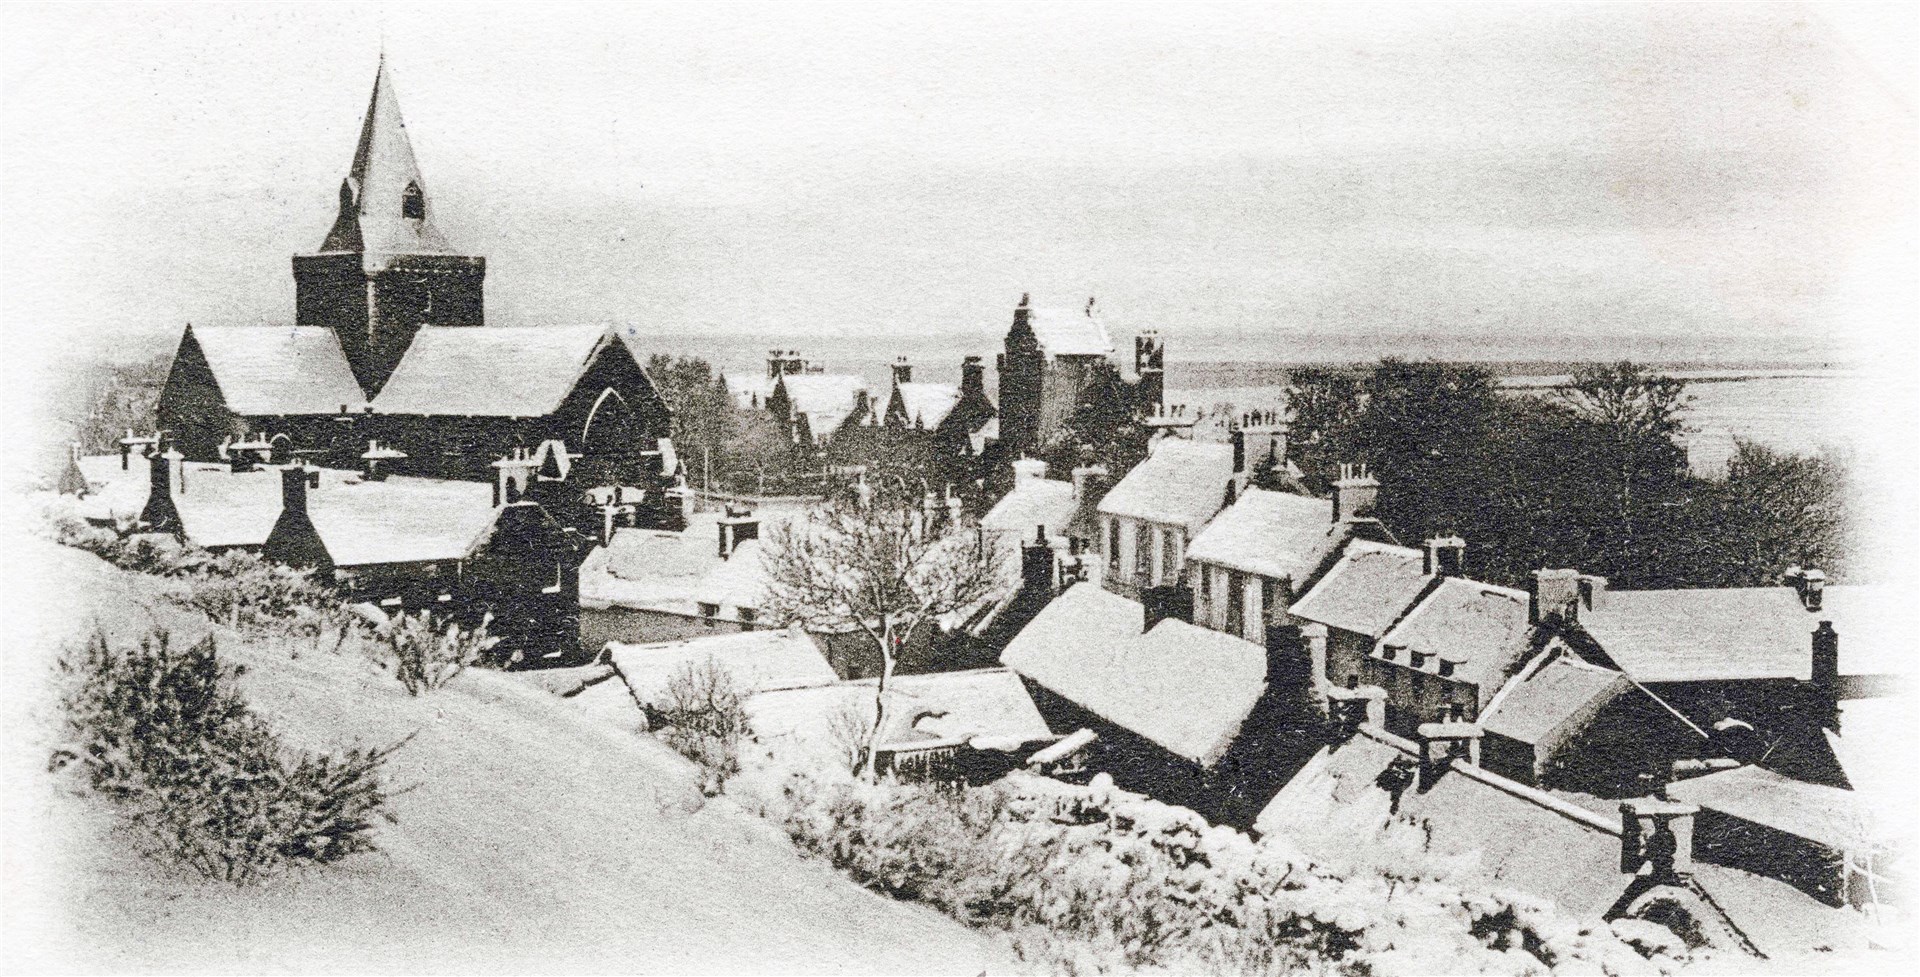 Image of snow-covered Dornoch, 1903. Image courtesy of www.ambaile.org.uk